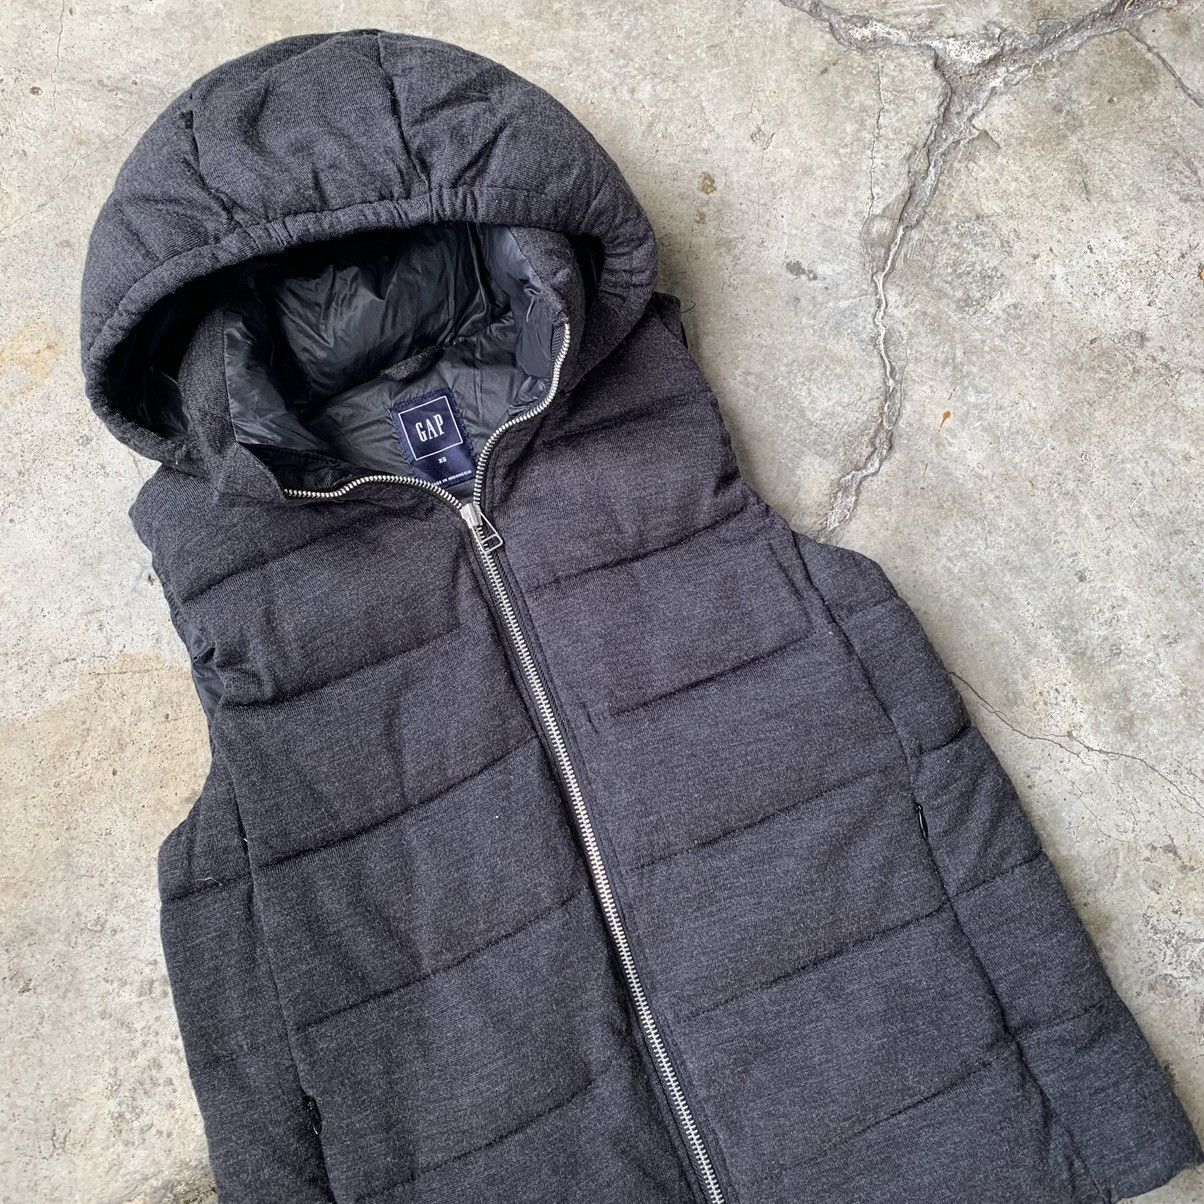 Gap Gap black hoodie vest Size US XS / EU 42 / 0 - 12 Preview